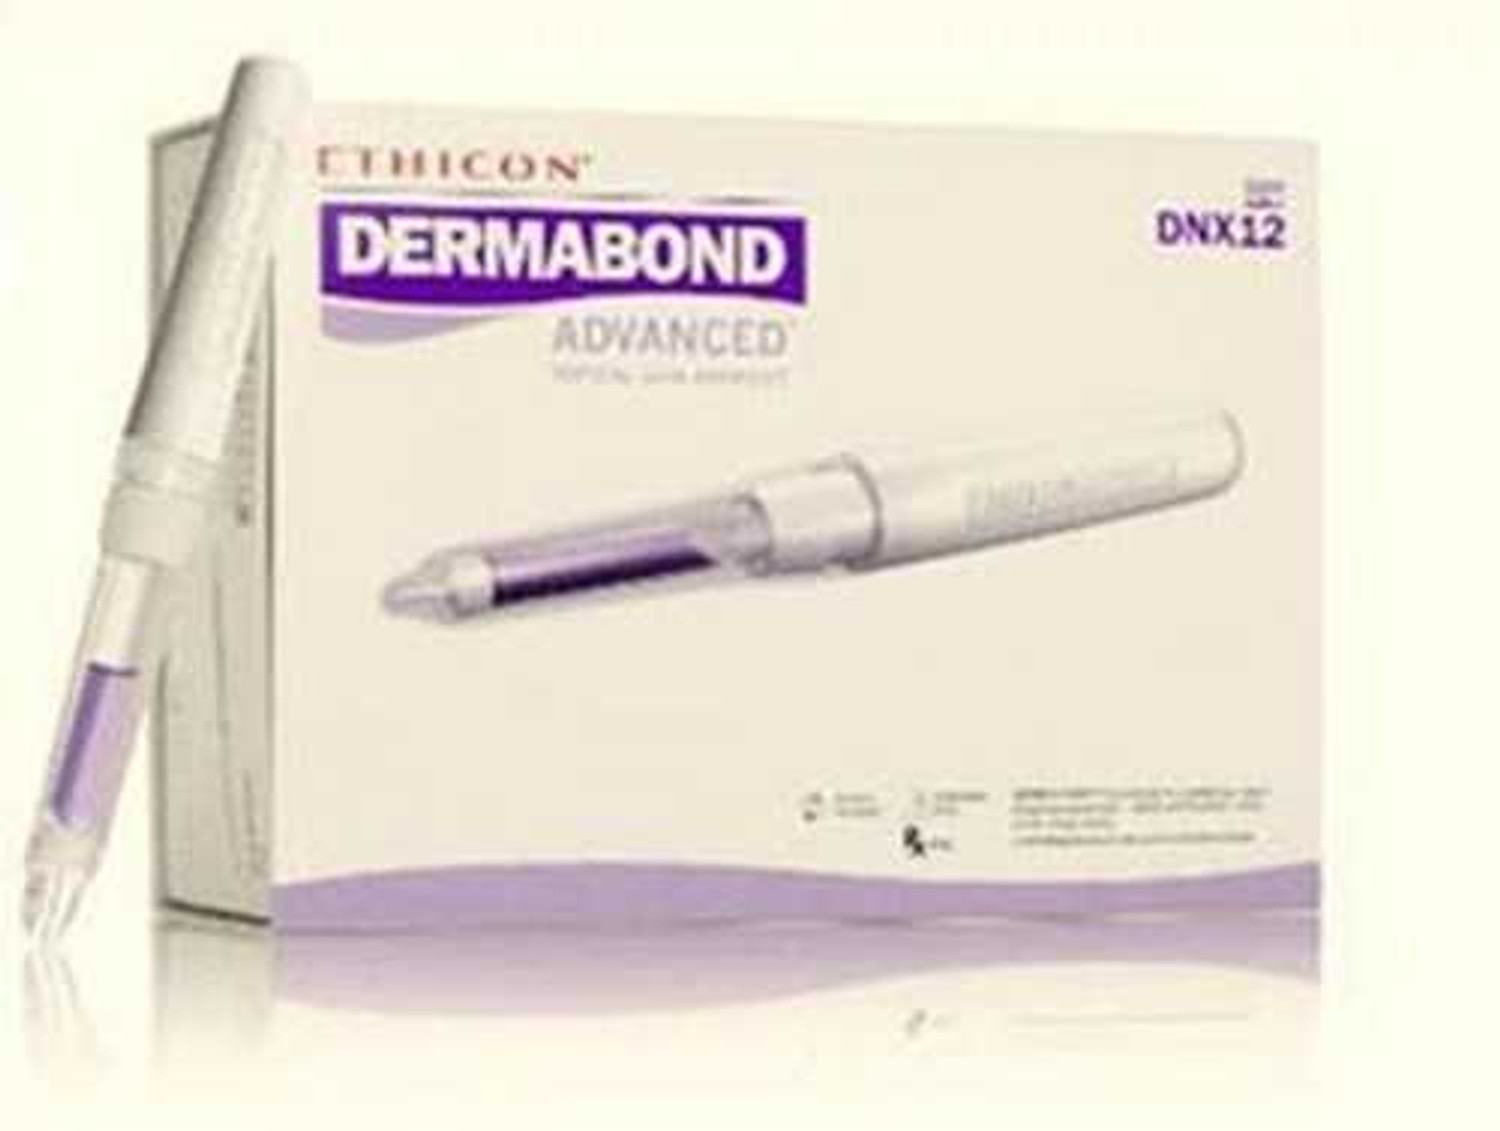 Dermabond mini topical skin adhesive